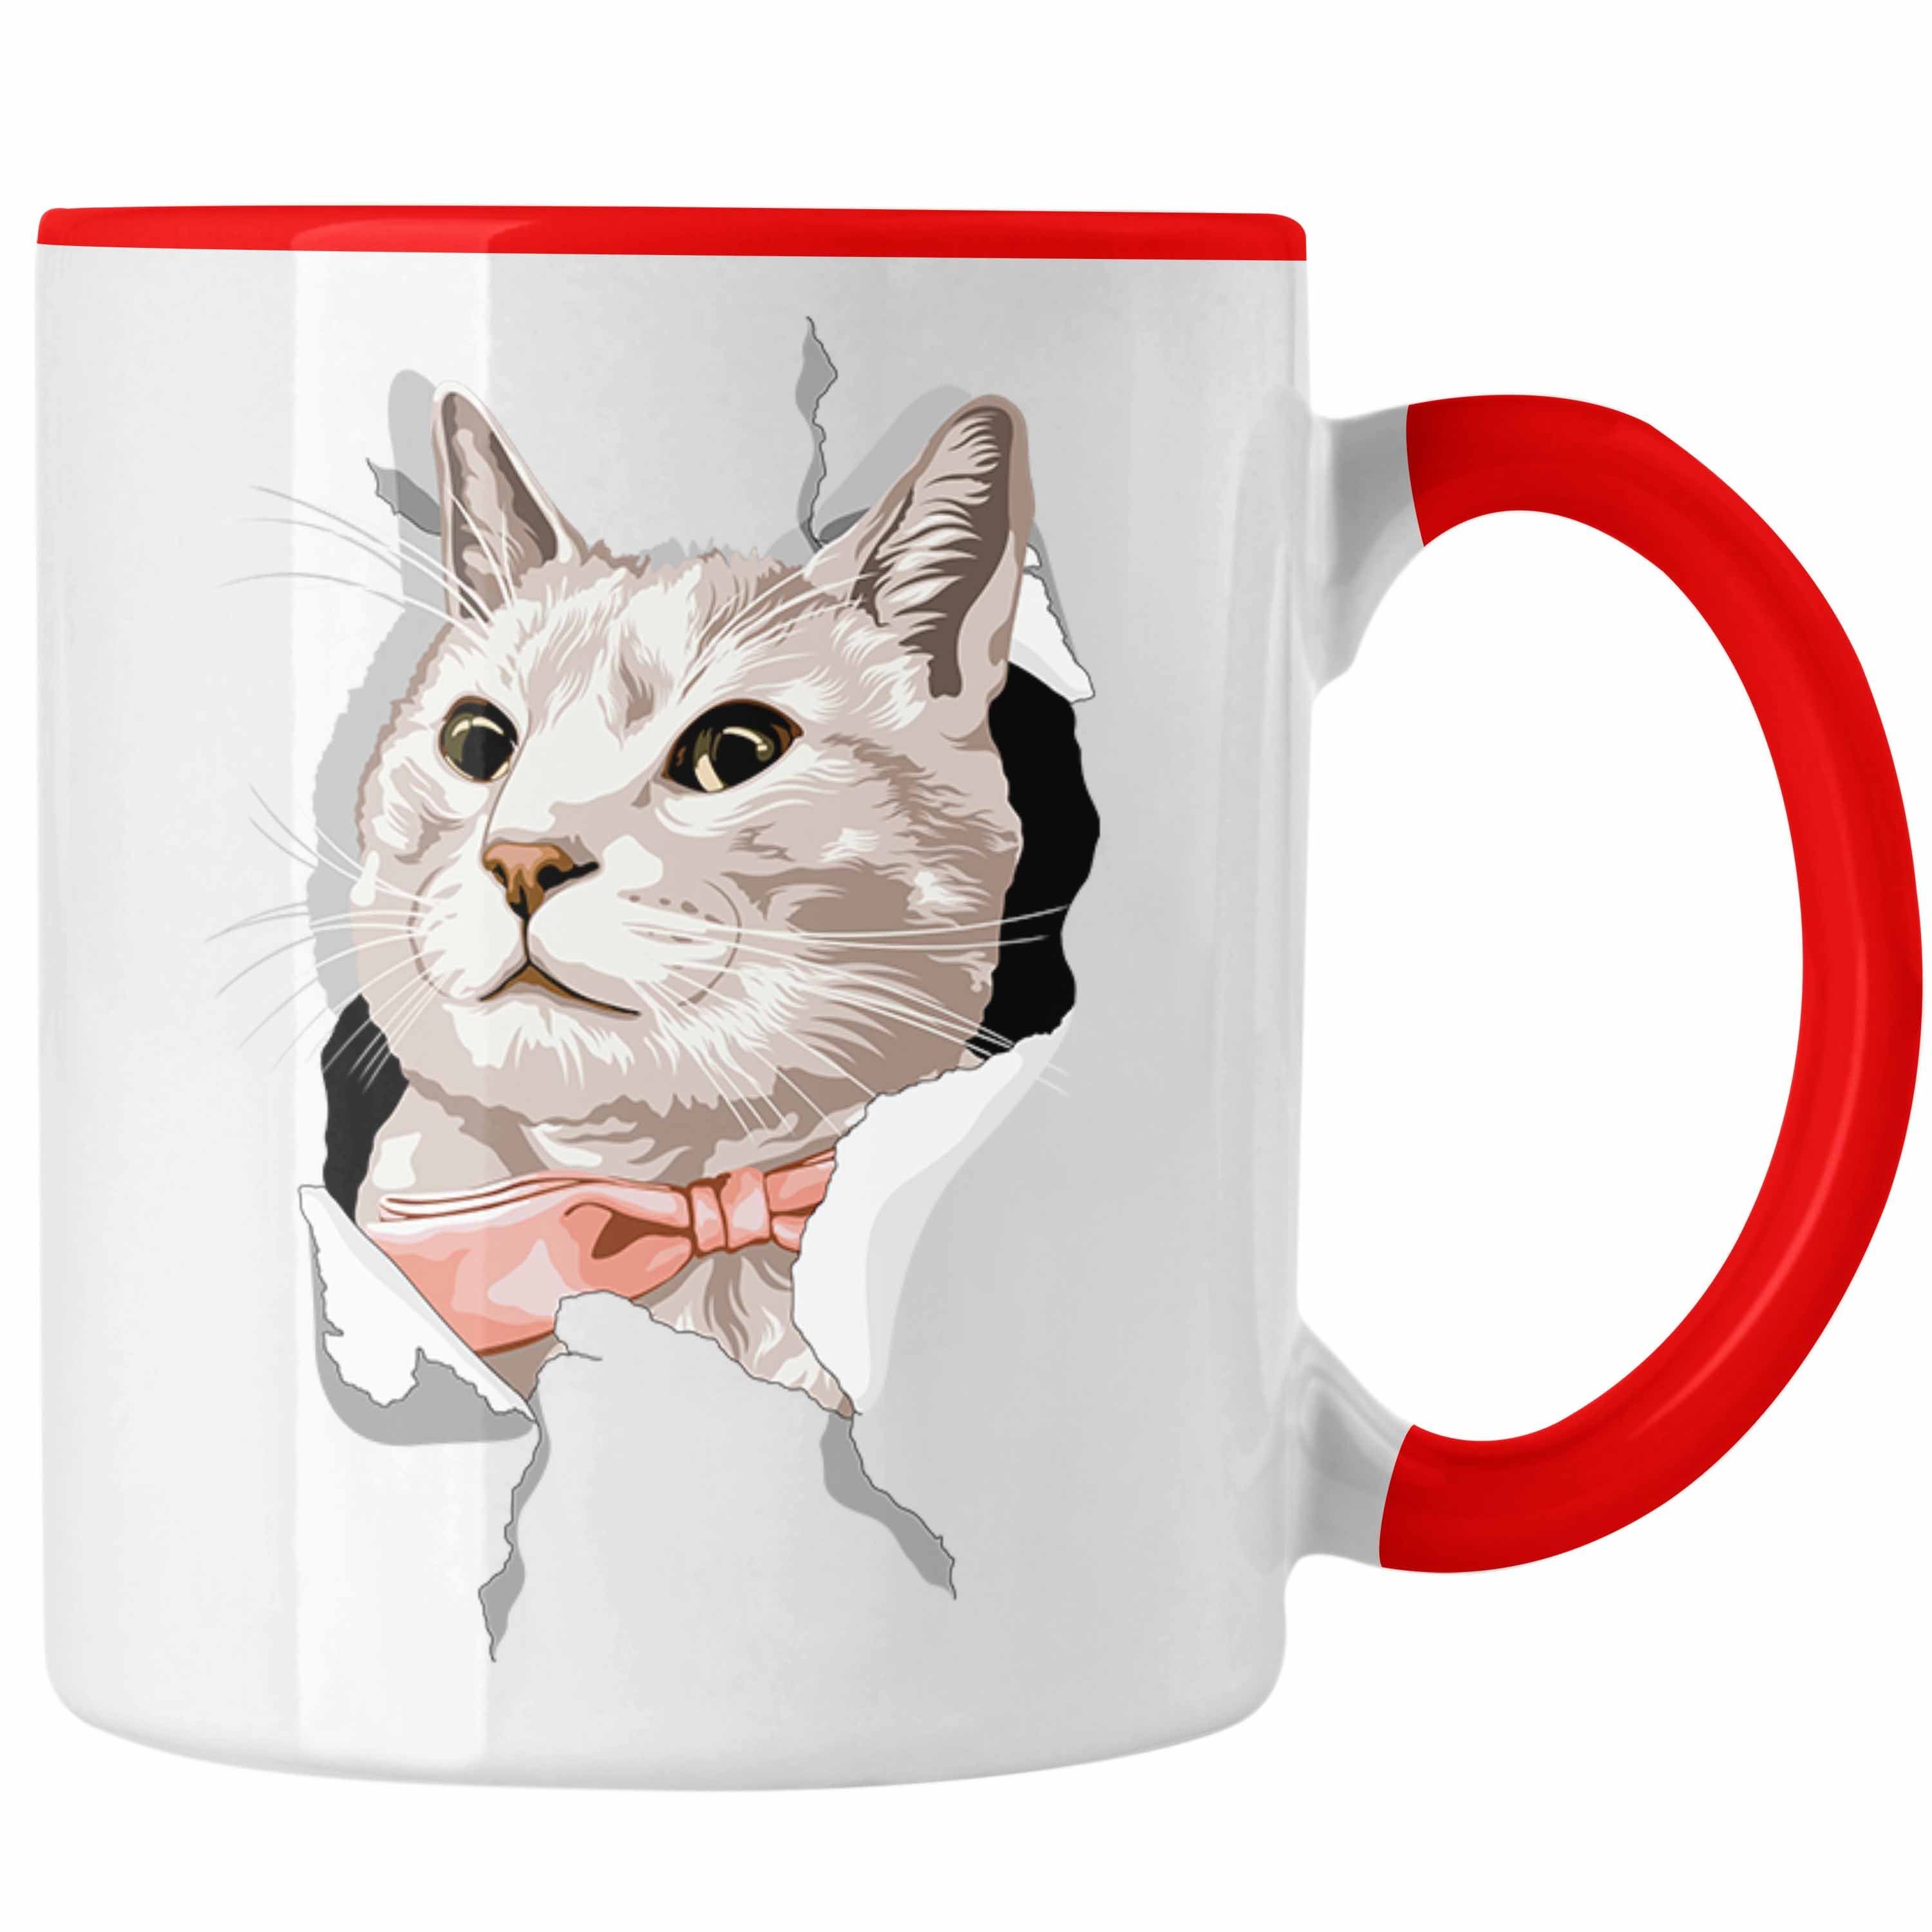 Trendation Tasse Trendation - Lustige Katzen Tasse Geschenk Katzenbesitzerin 3D Katzengrafik Geschenkidee Rot